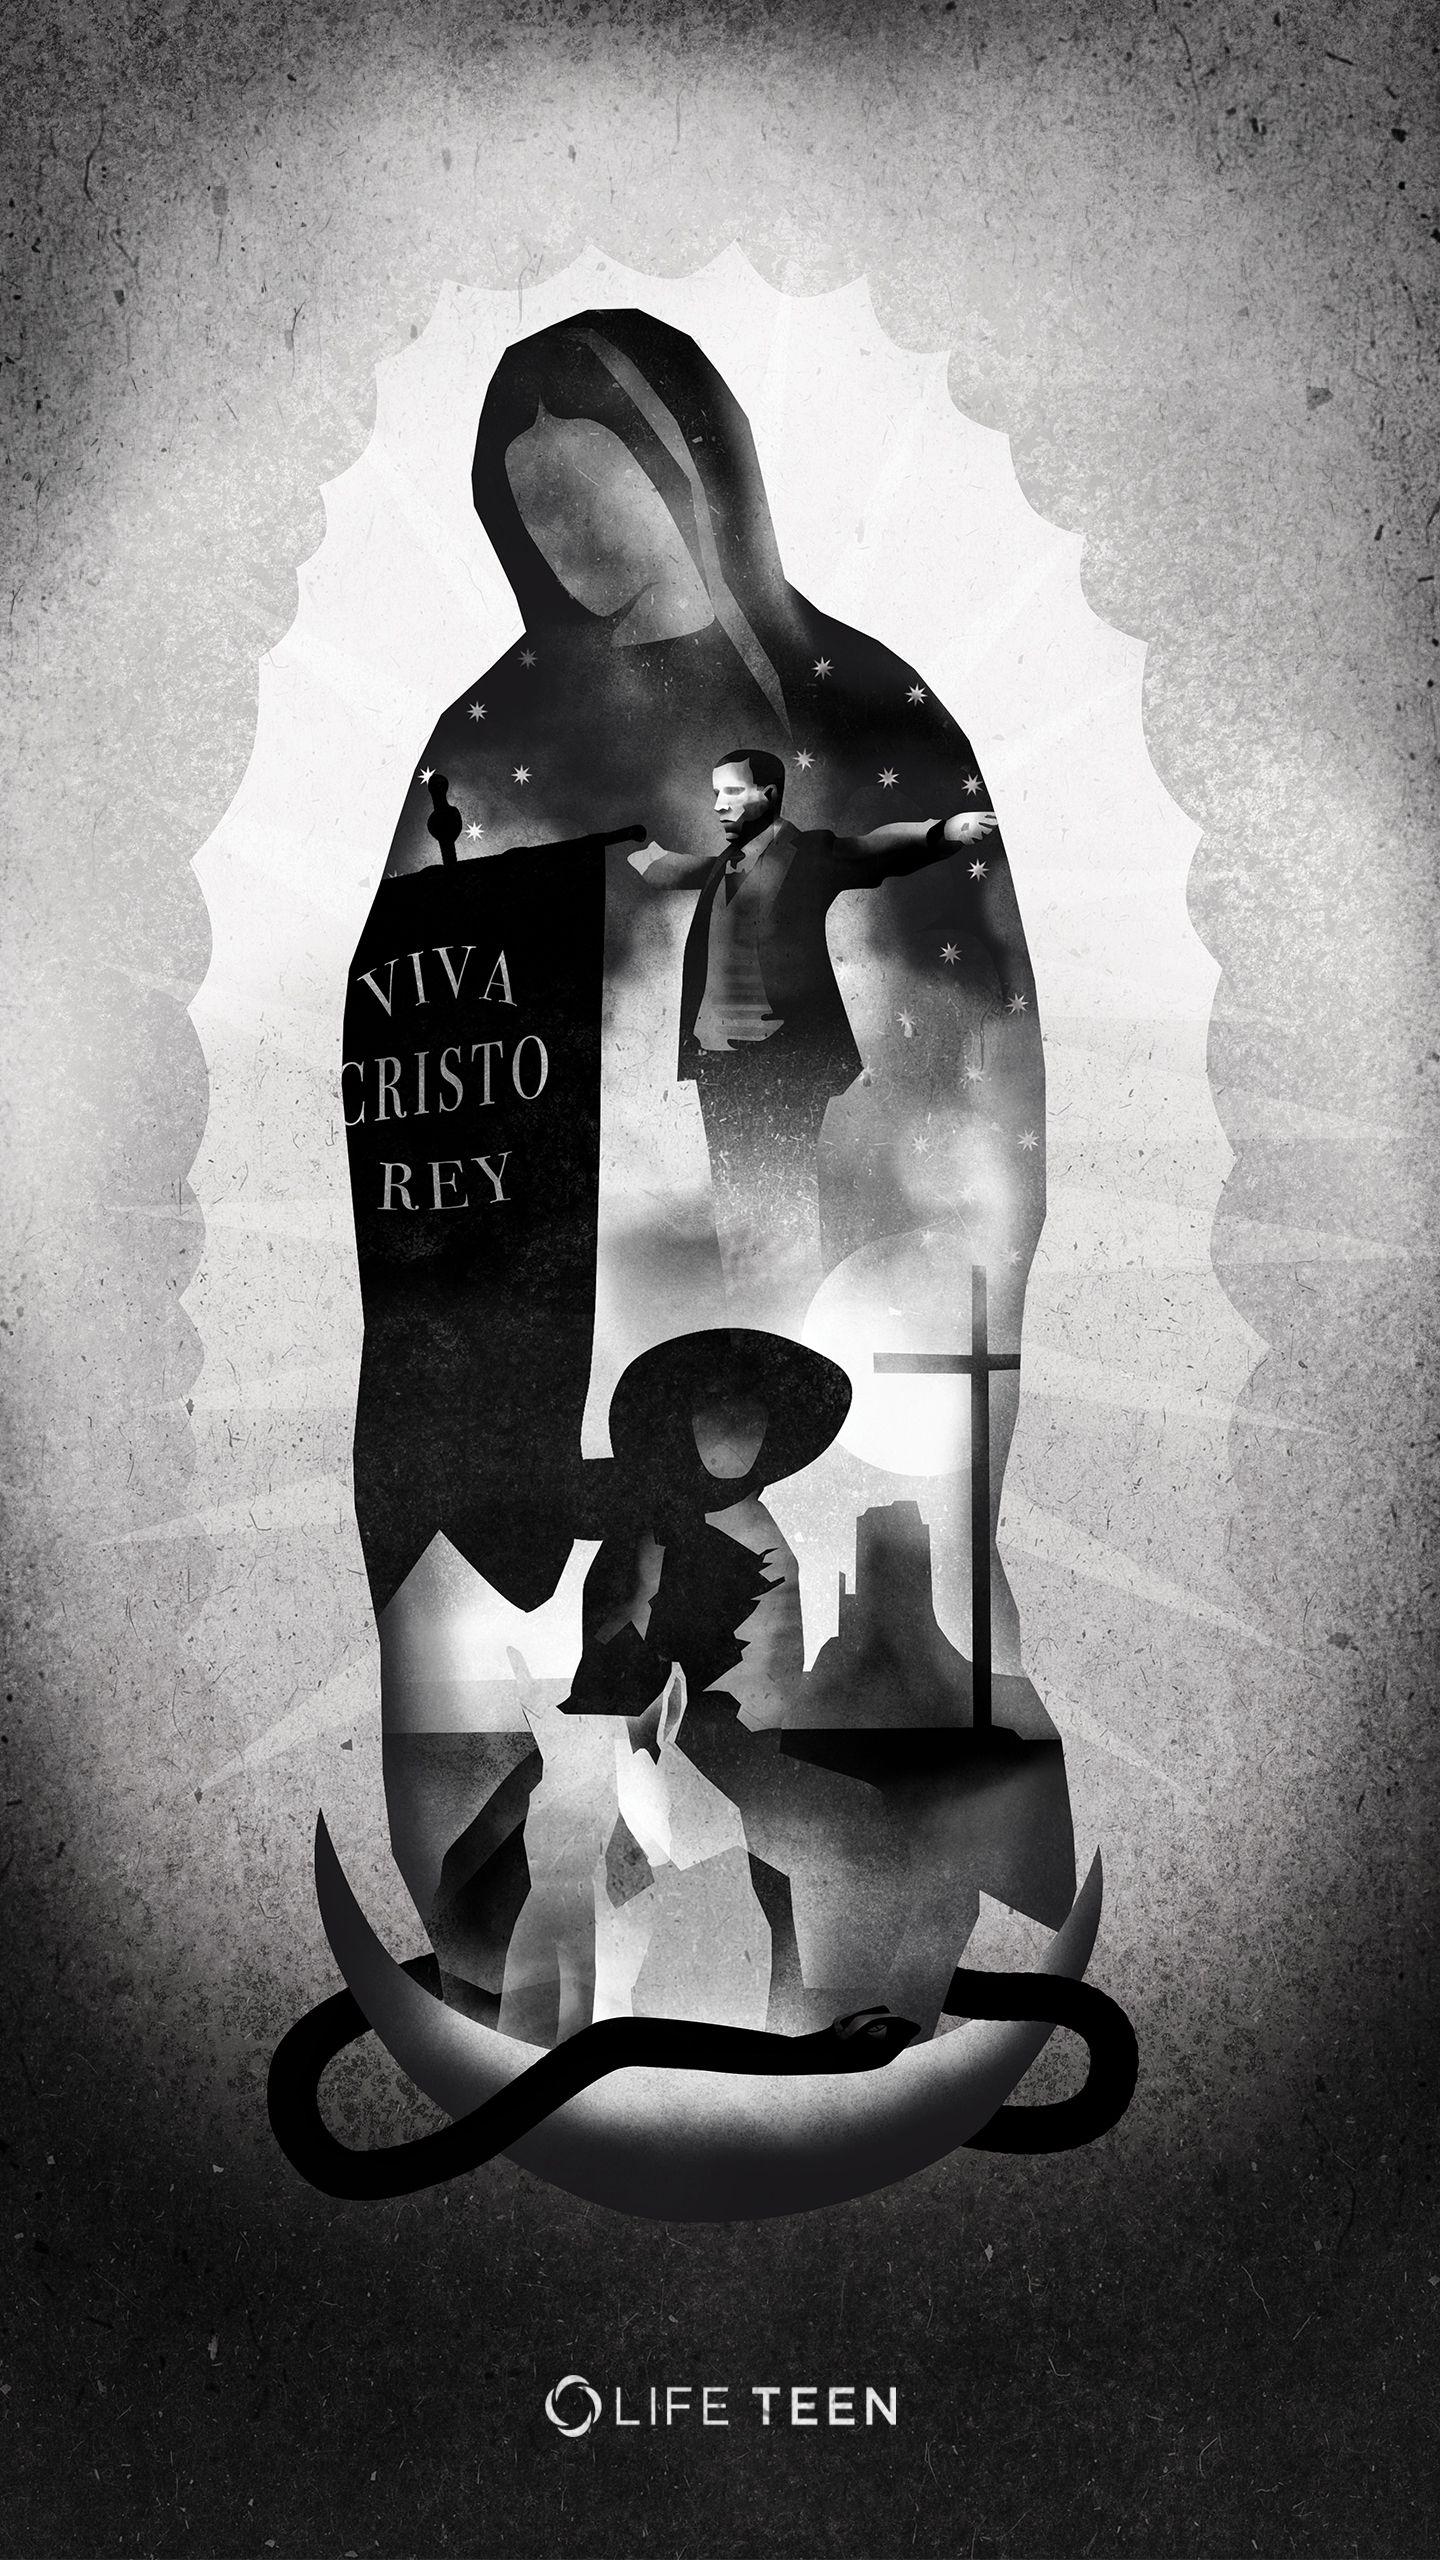 Viva Cristo Rey Wallpaper for Phone and Desktop.com for Catholic Youth